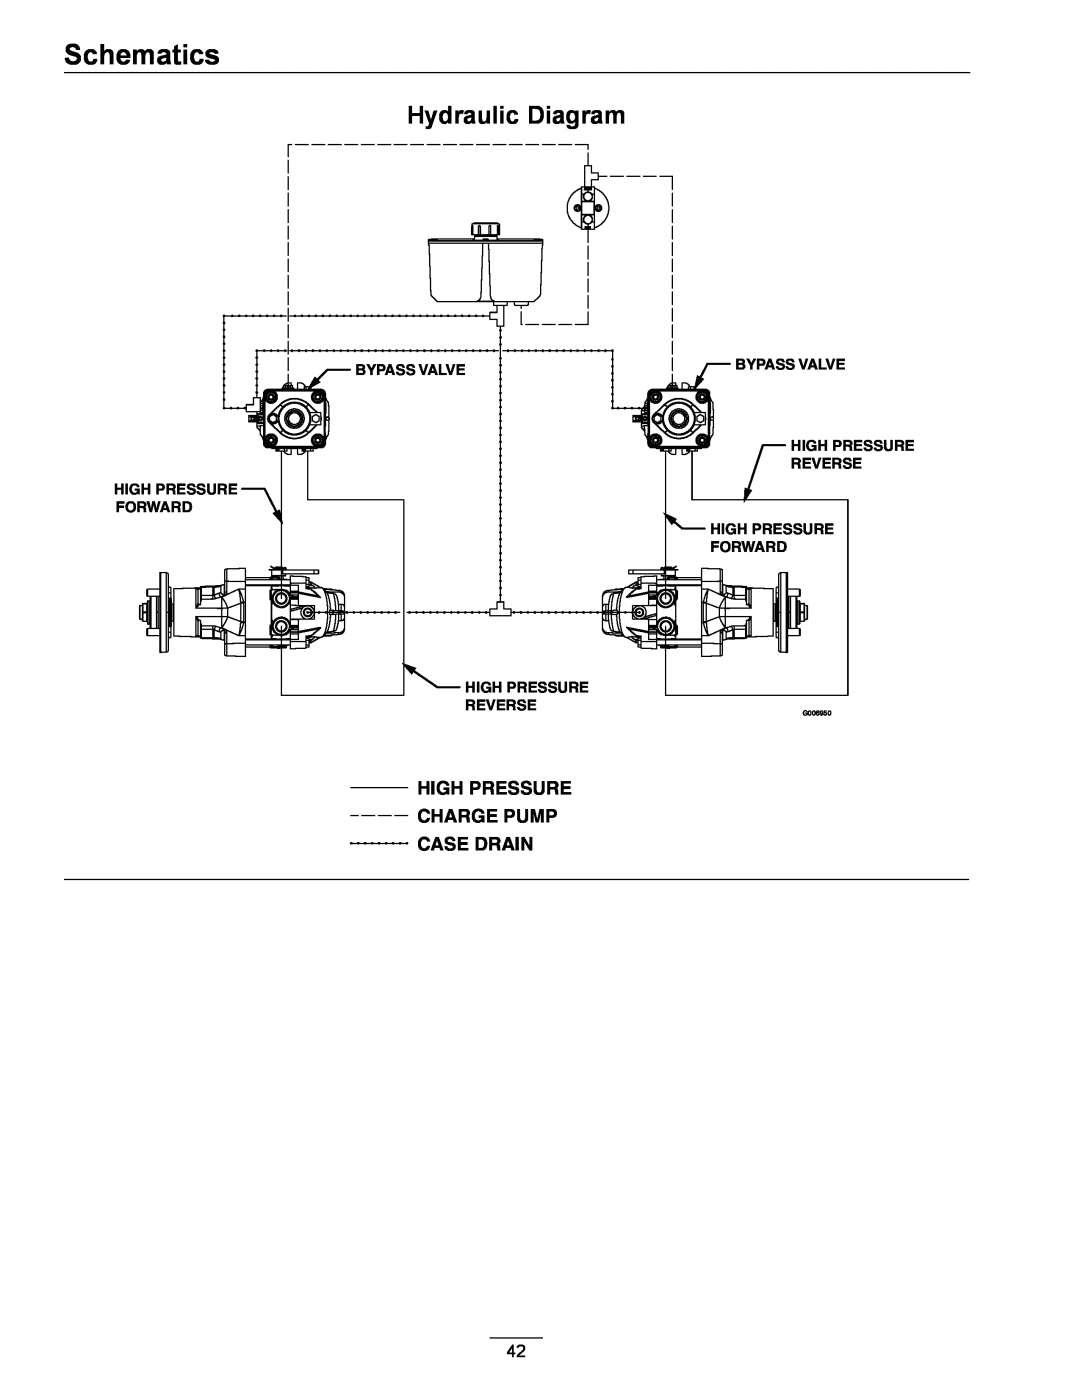 Exmark 850 manual Hydraulic Diagram, Schematics, High Pressure Charge Pump Case Drain, High Pressure Forward, Bypass Valve 